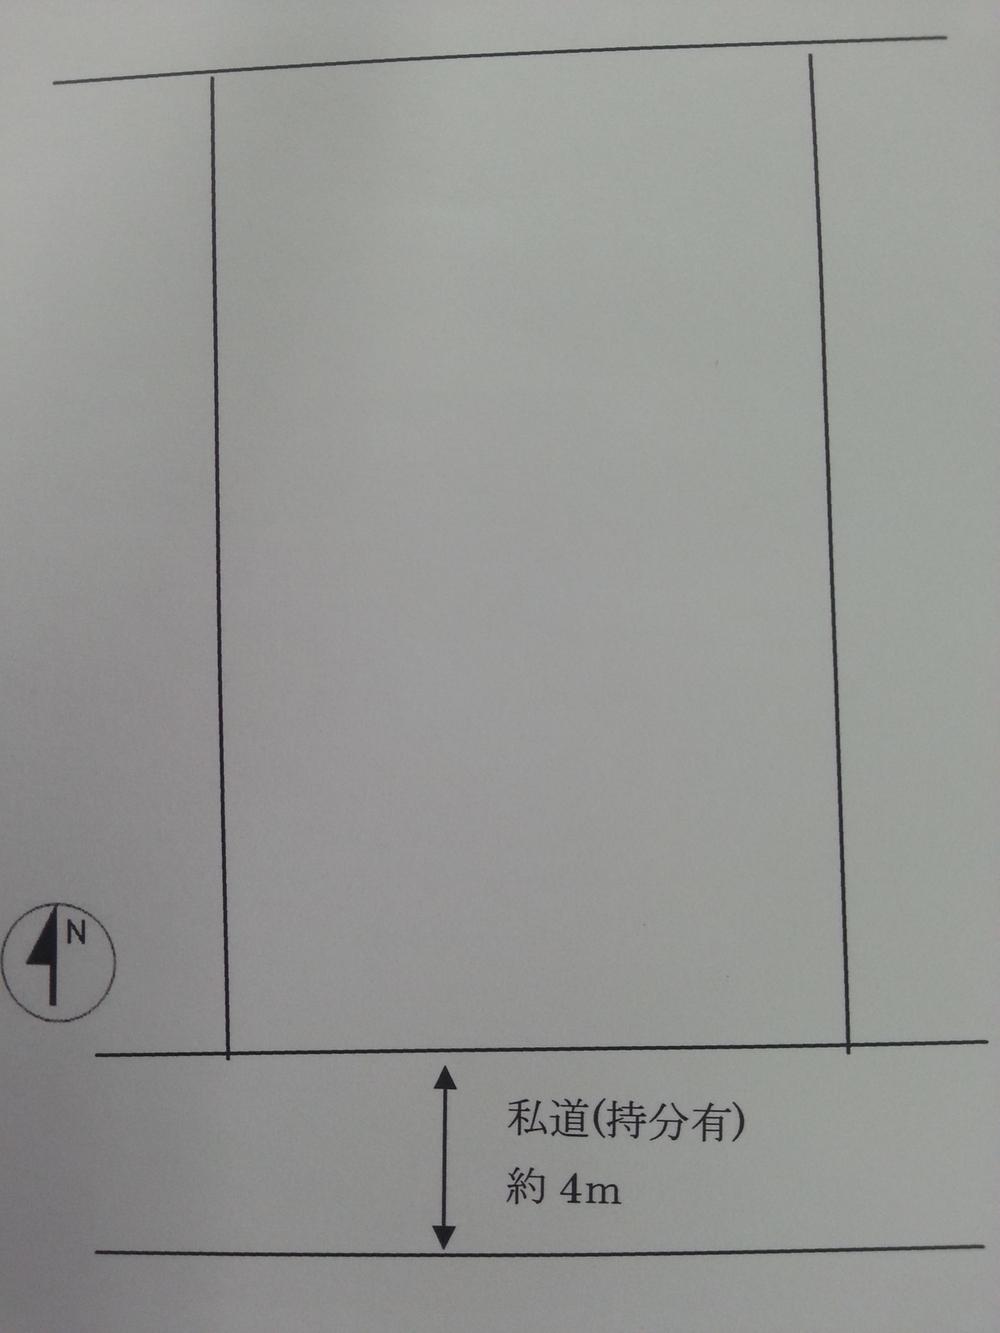 Compartment figure. Land price 8.5 million yen, Land area 111.12 sq m